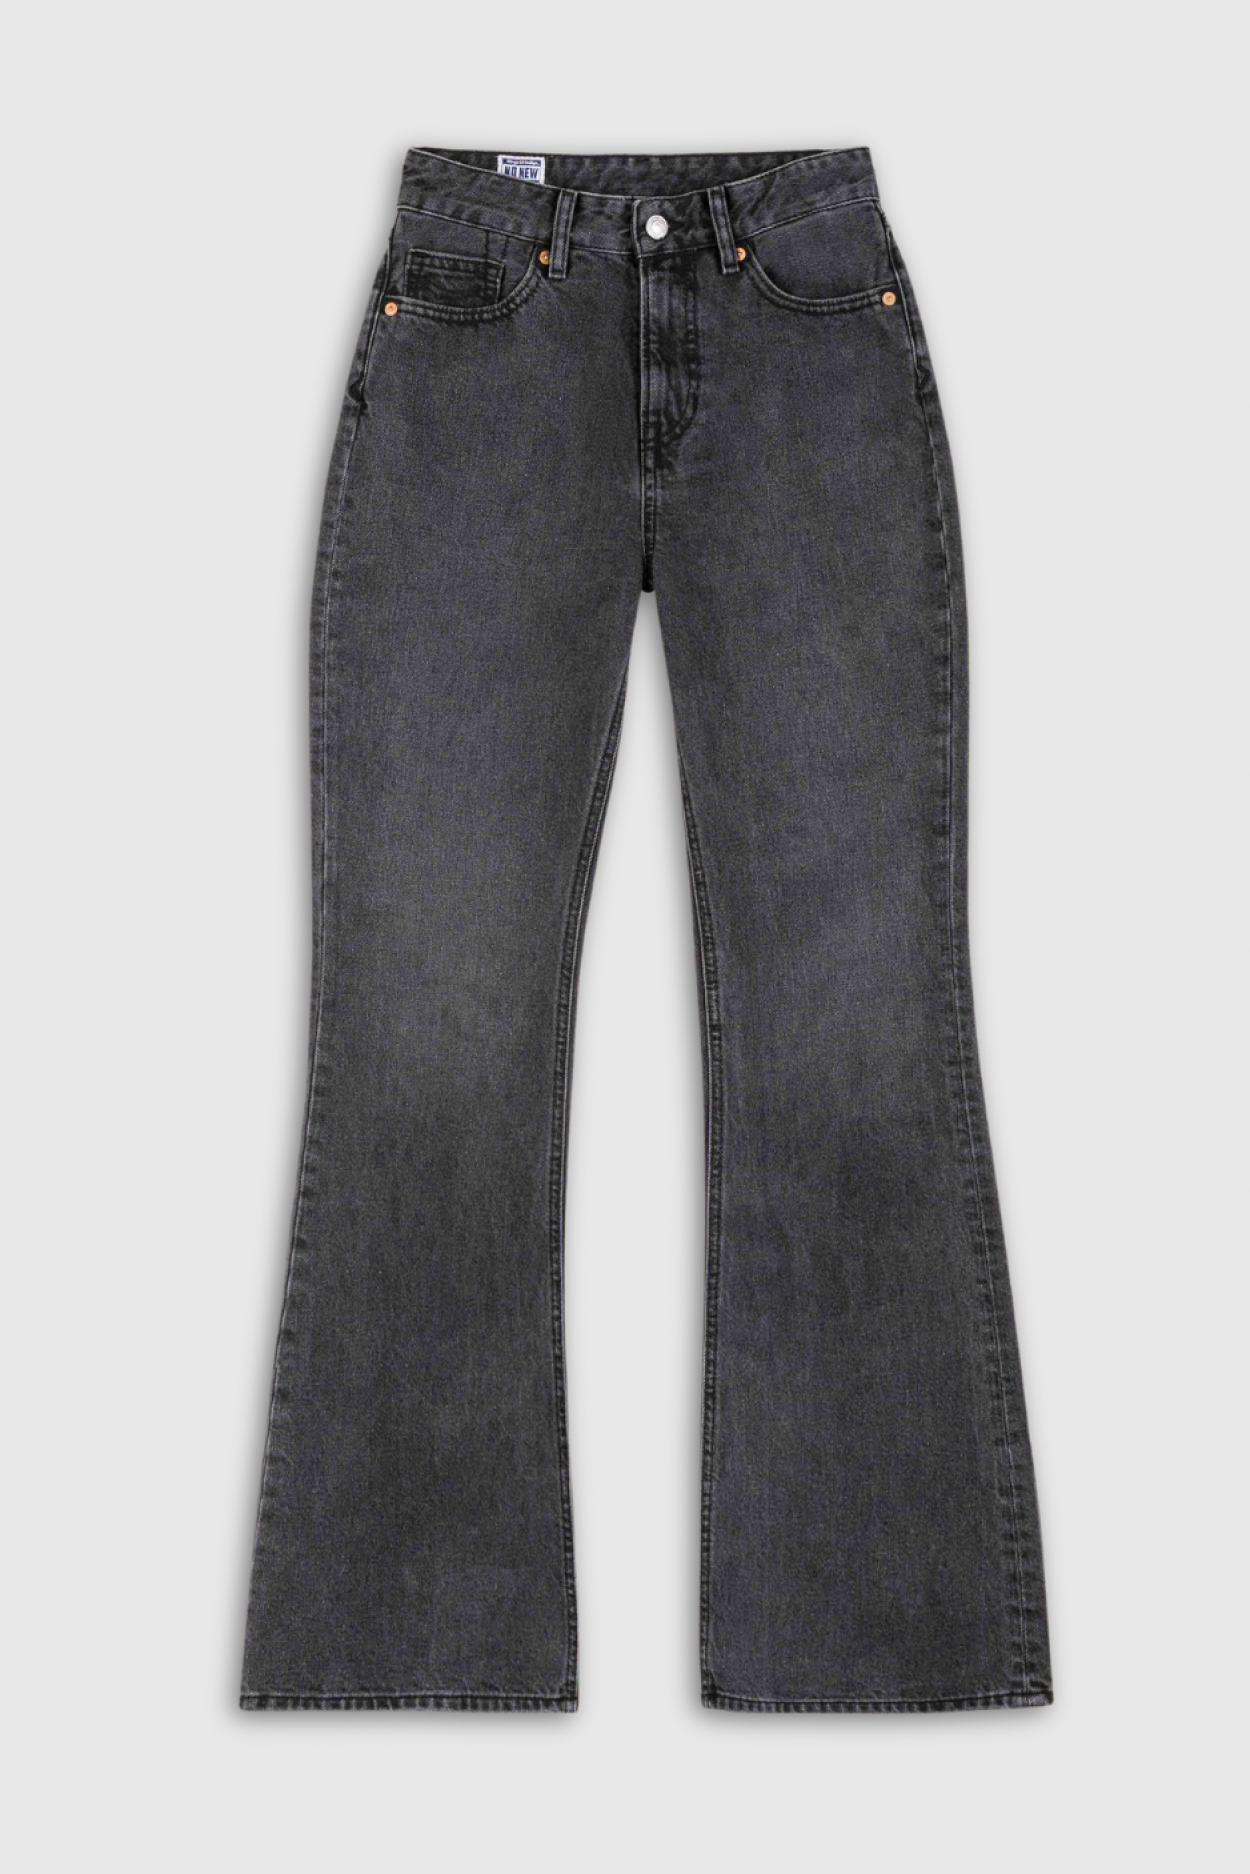 Kymaro Womens Size 11/12 Medium Wash High Rise Straight Leg Denim Jeans